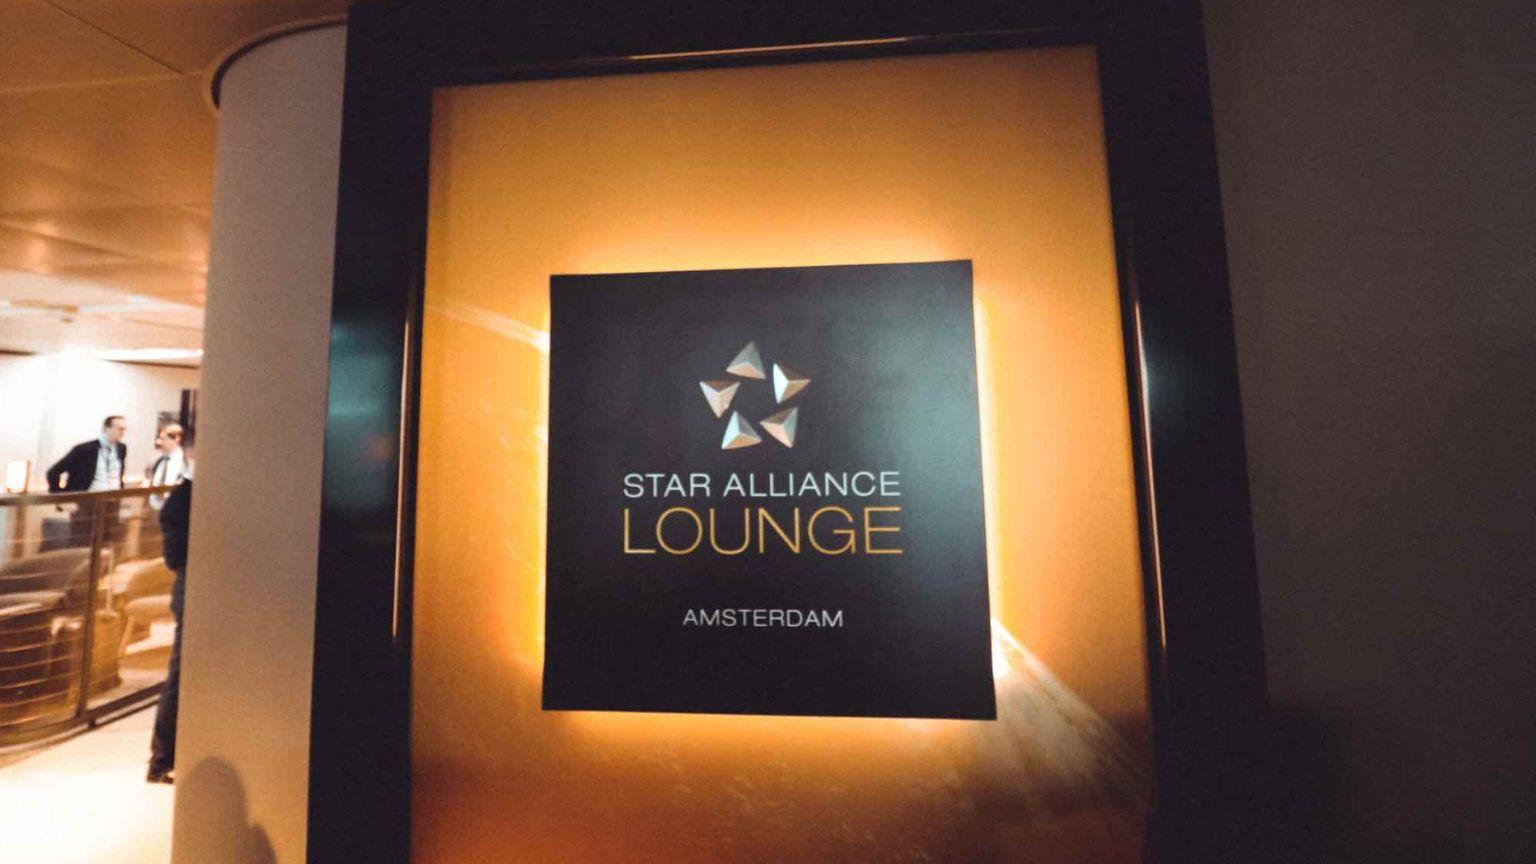 Star Alliance Lounge, Main Terminal Entrance, Amsterdam